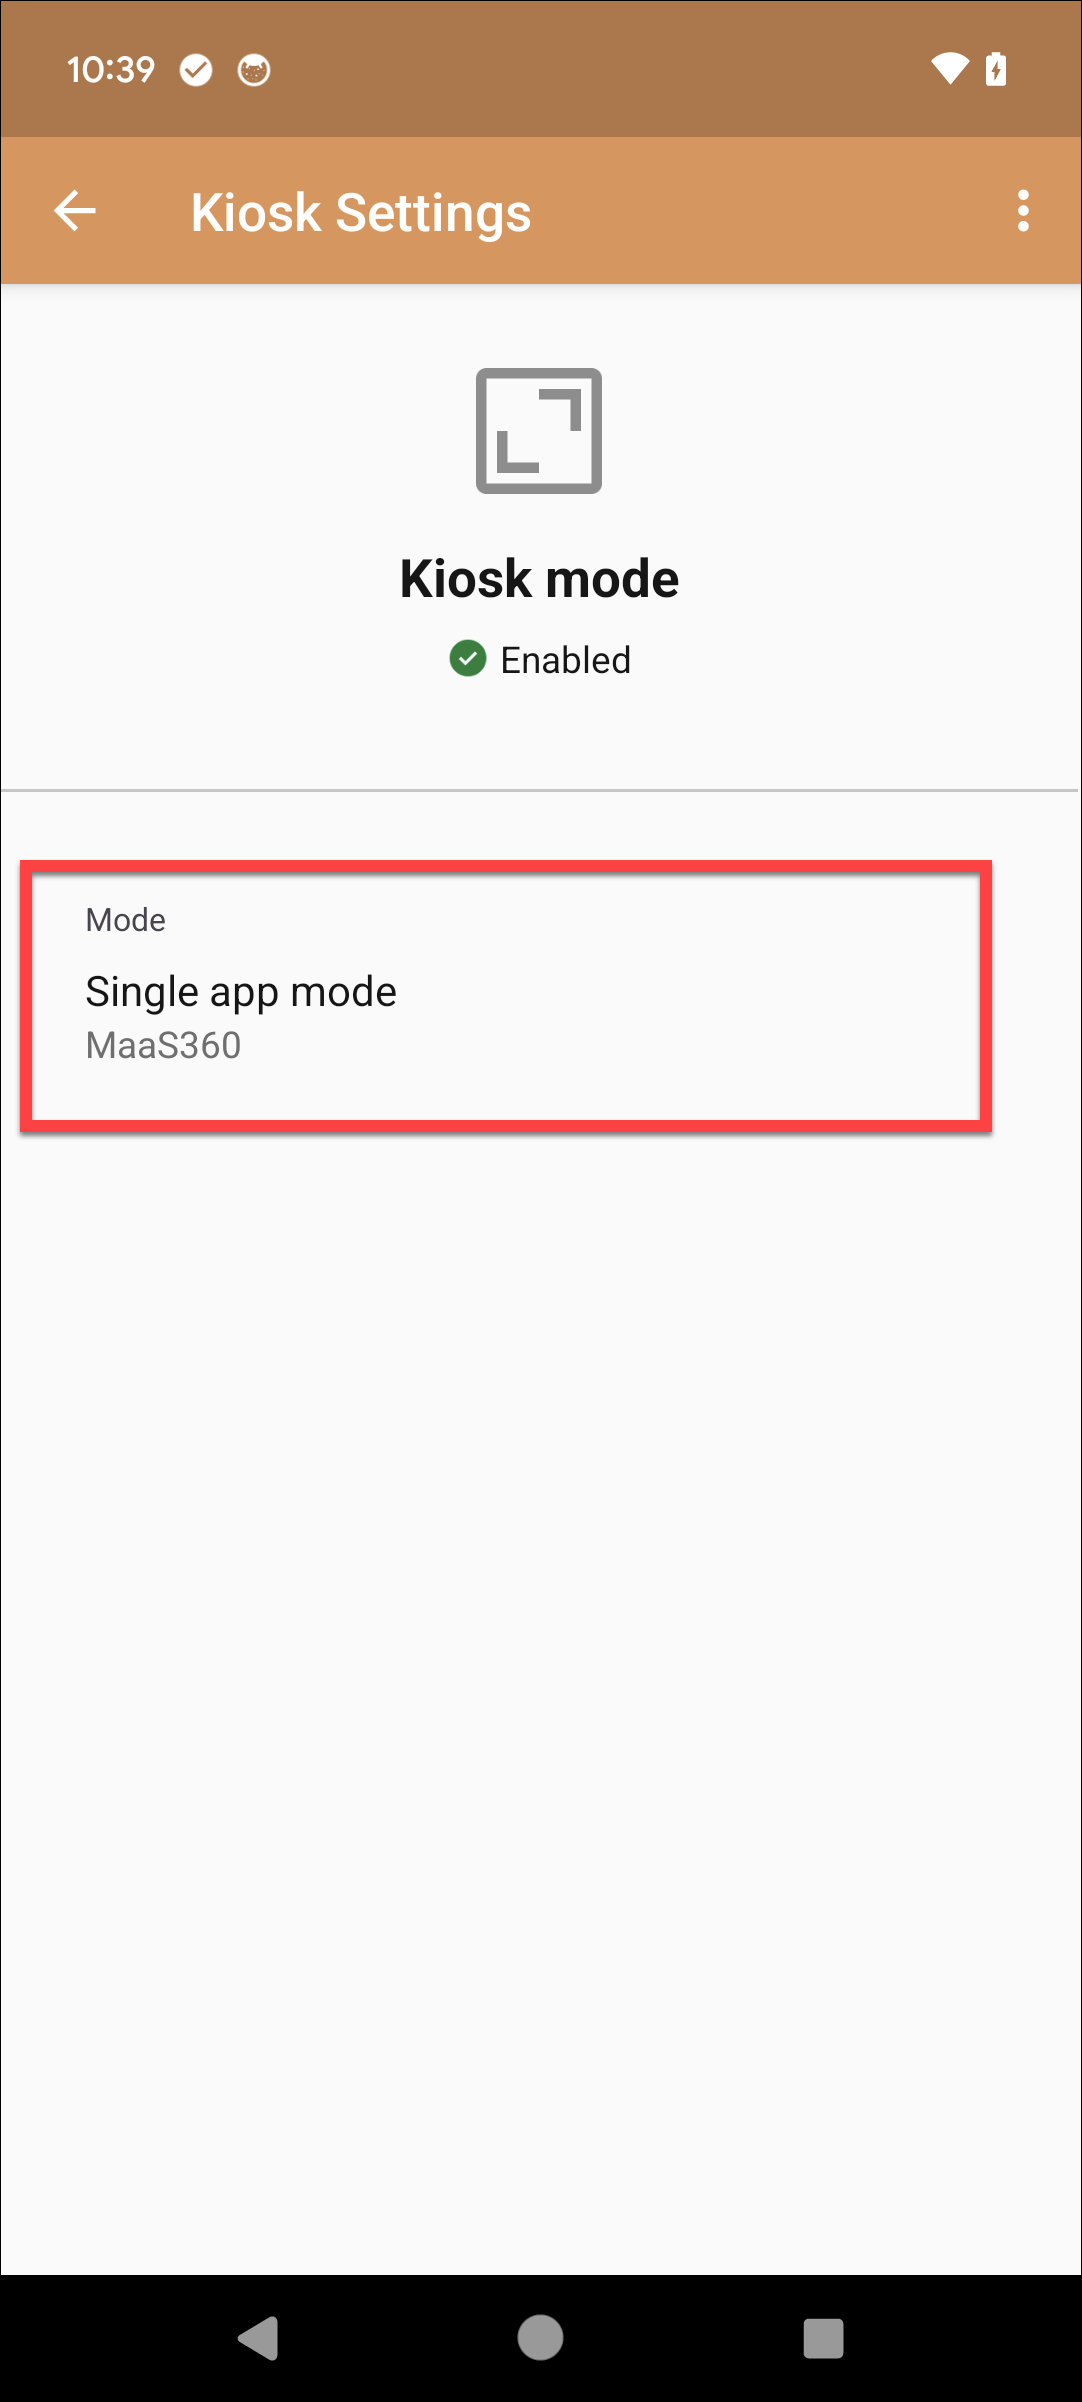 COSU mode type is Single app mode